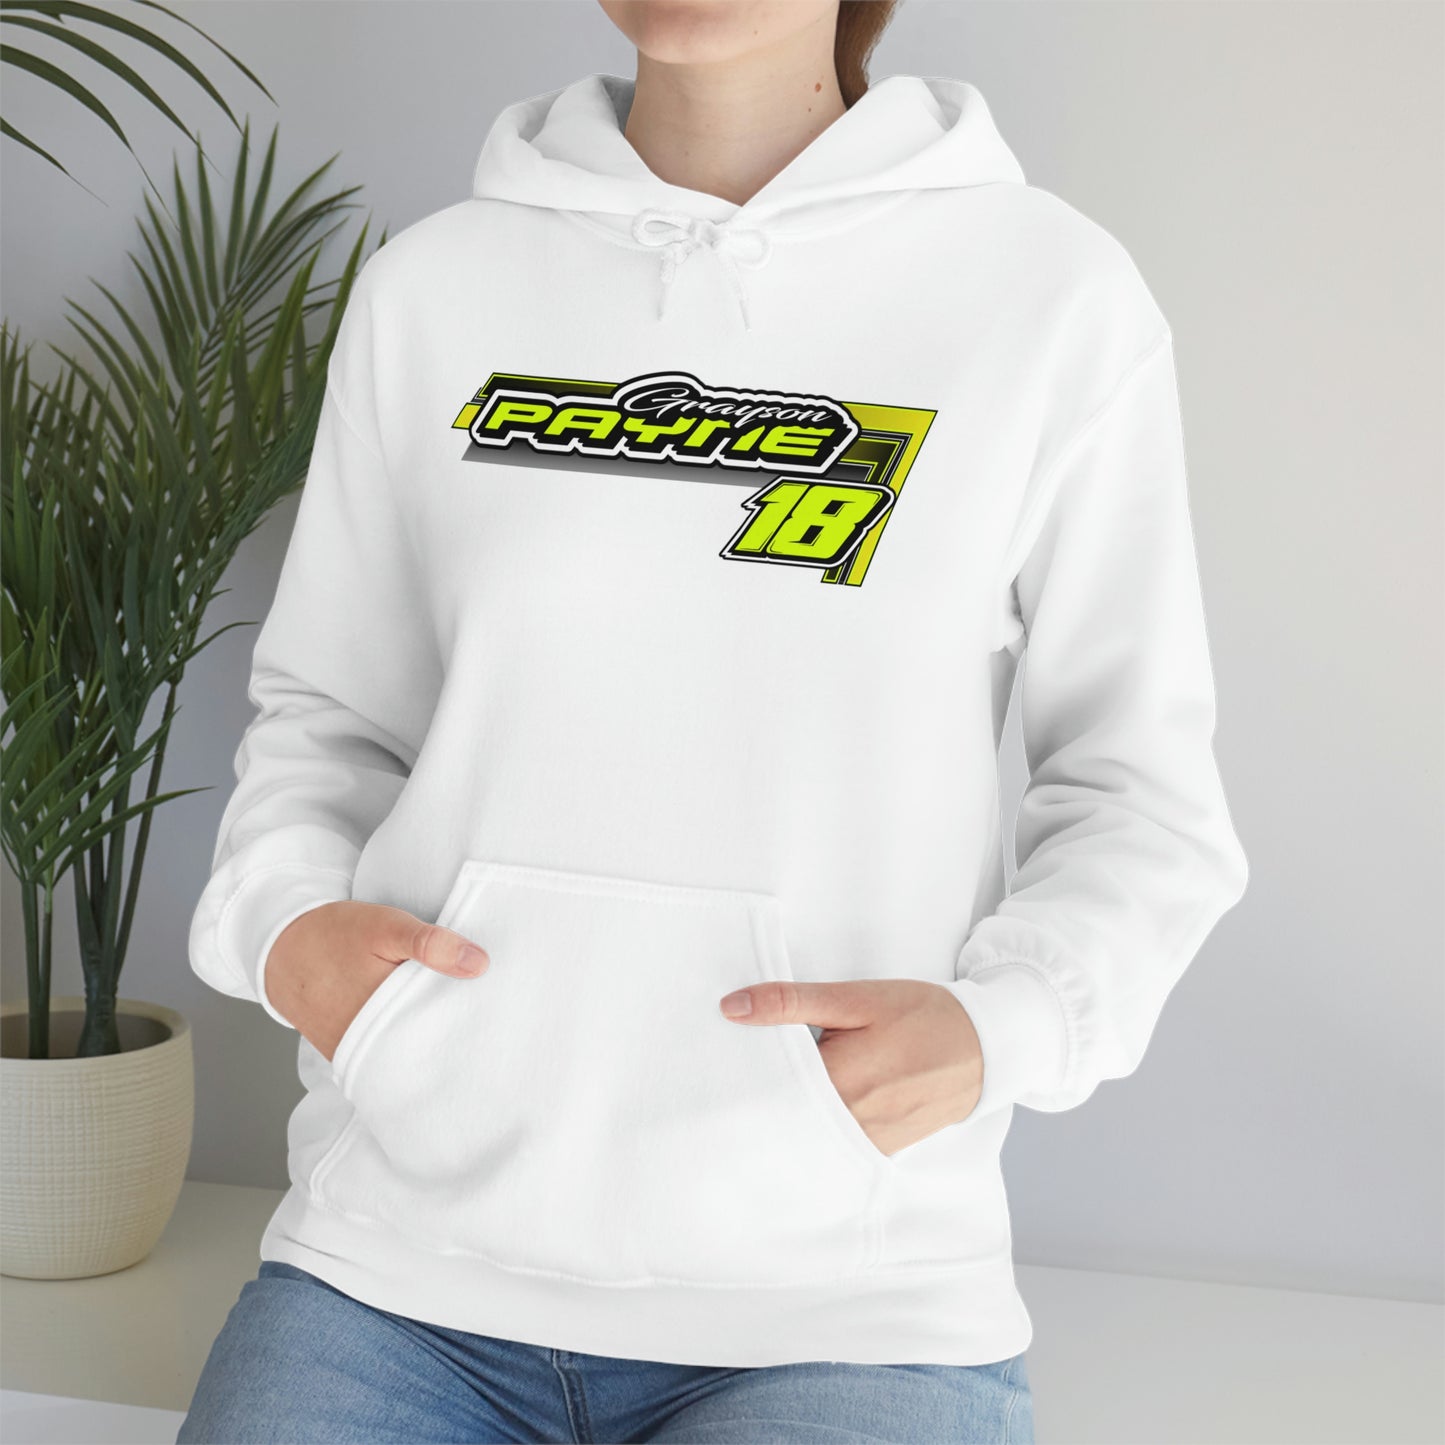 Adult Unisex Champ Kart Sweatshirt